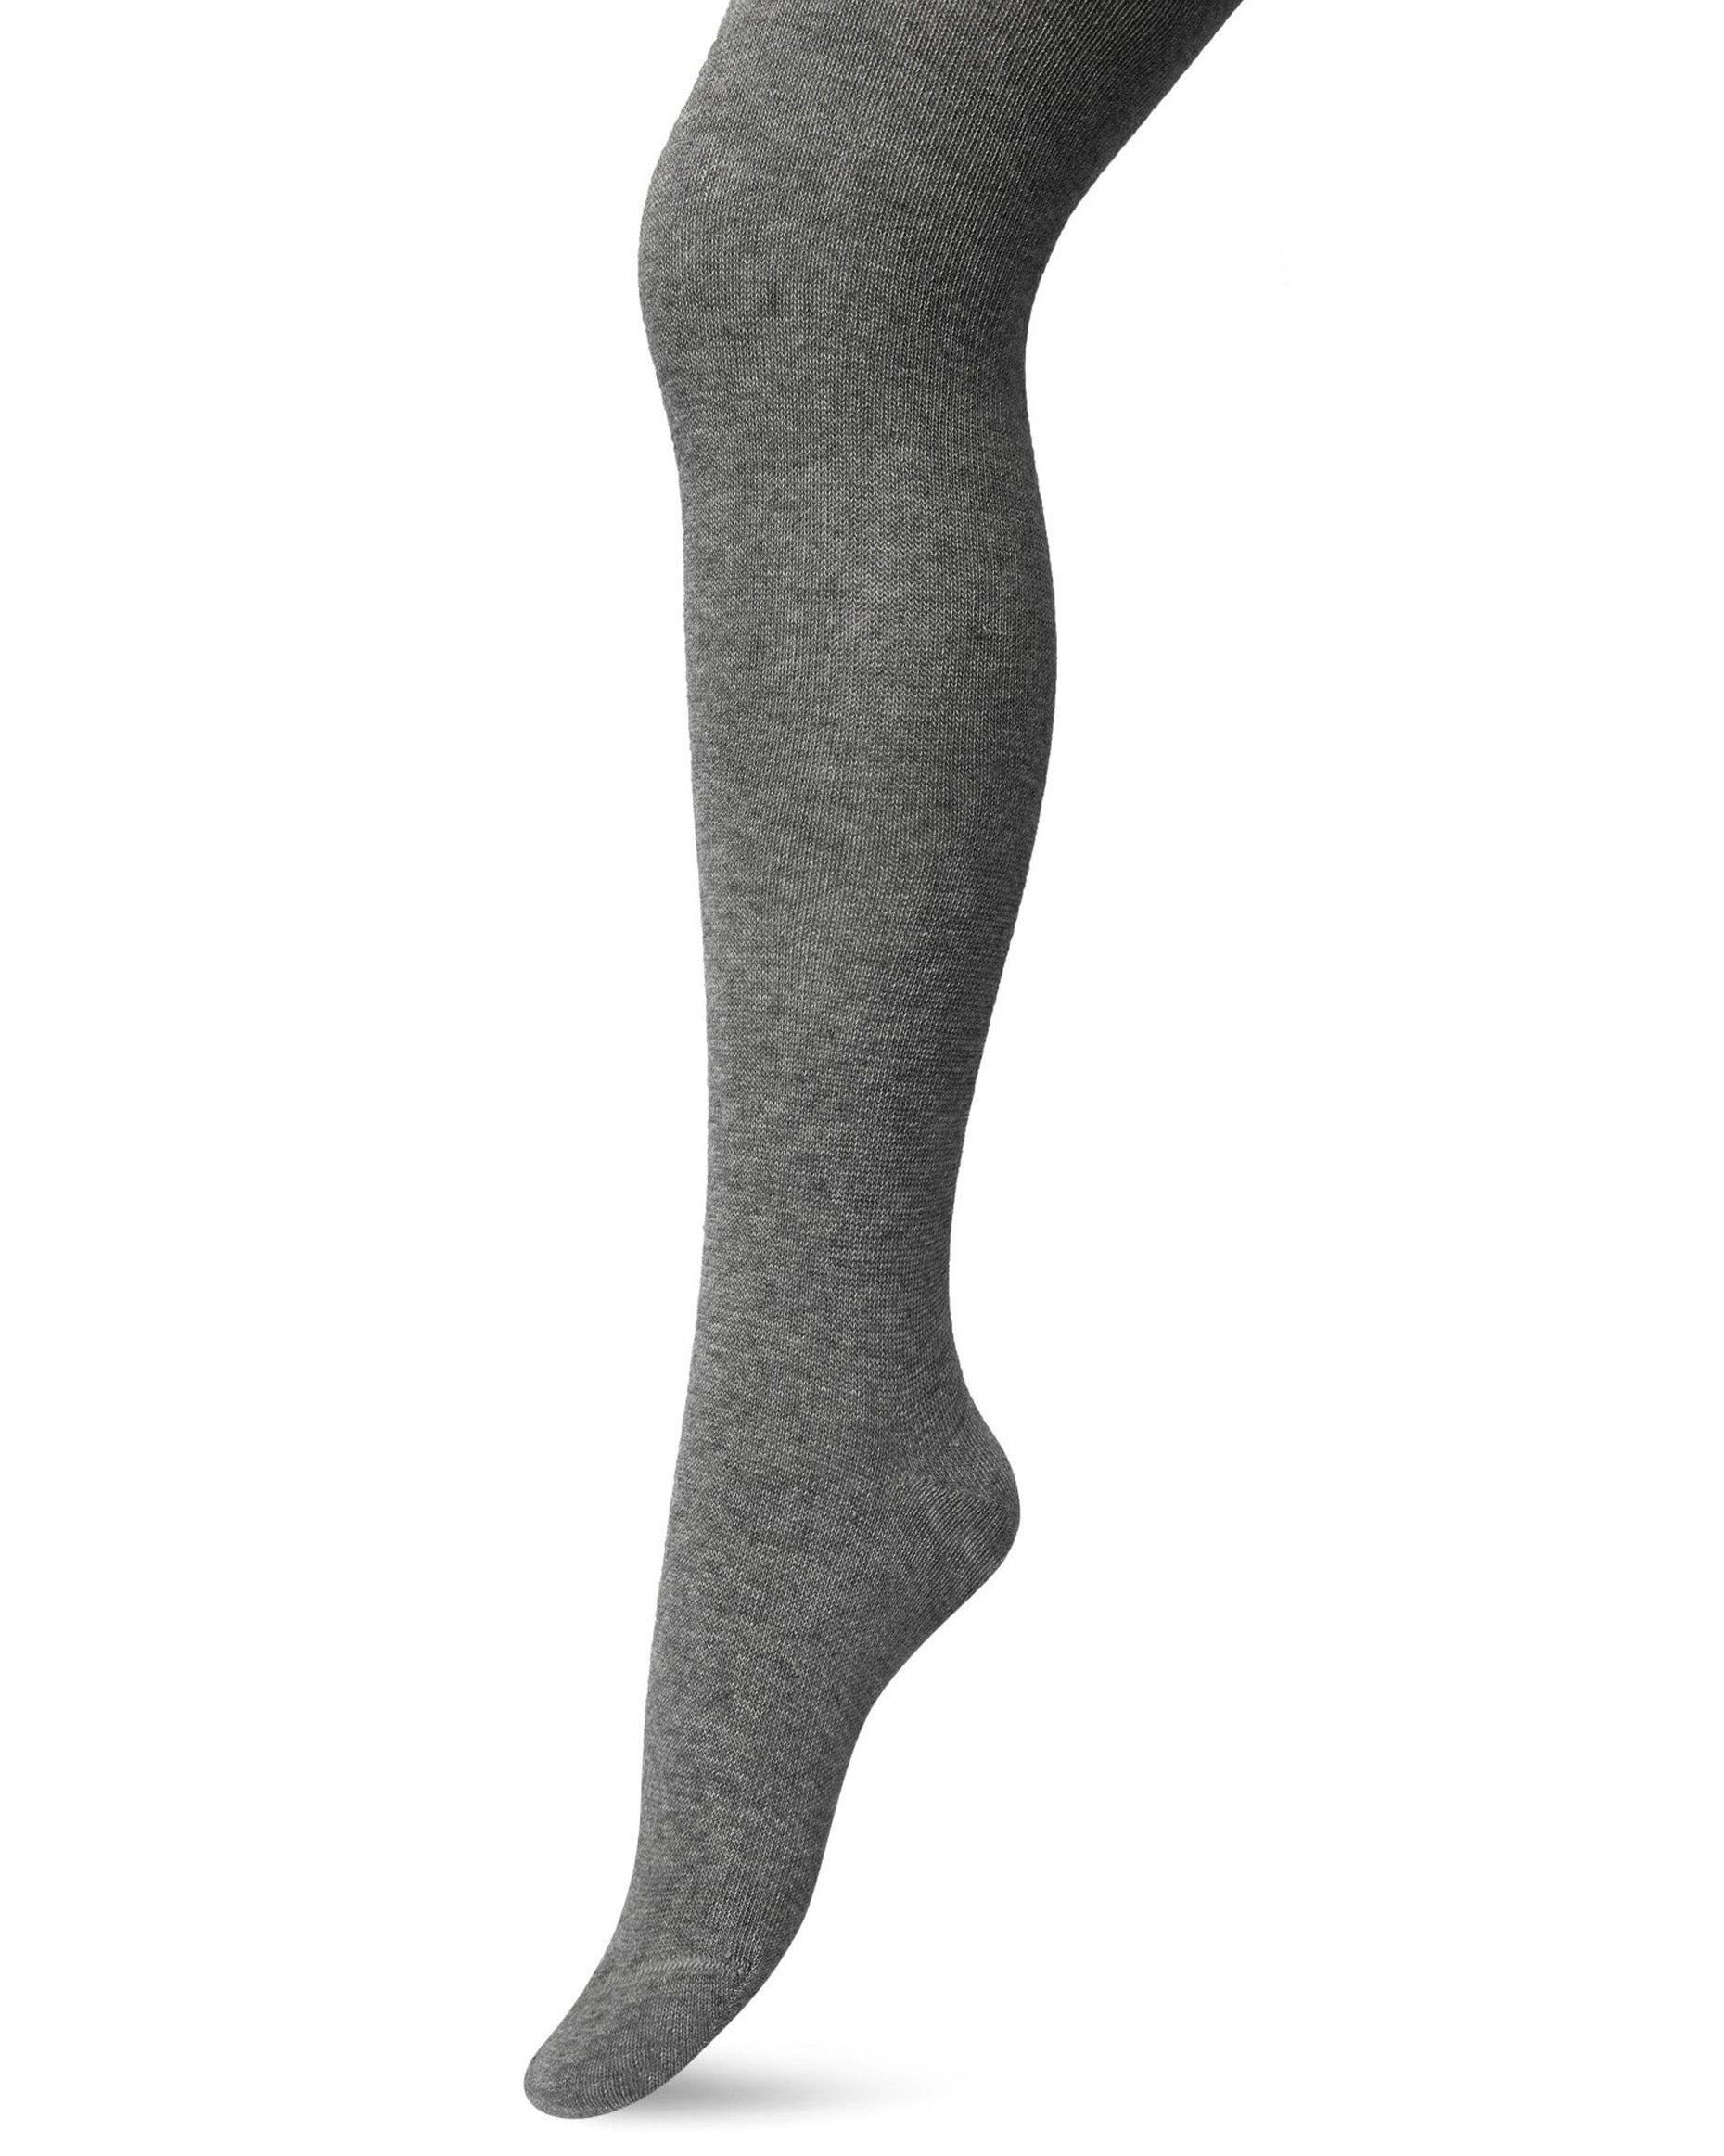 Bonnie Doon Bio Cotton Tights - Dark grey warm and soft knitted organic cotton Winter thermal tights.